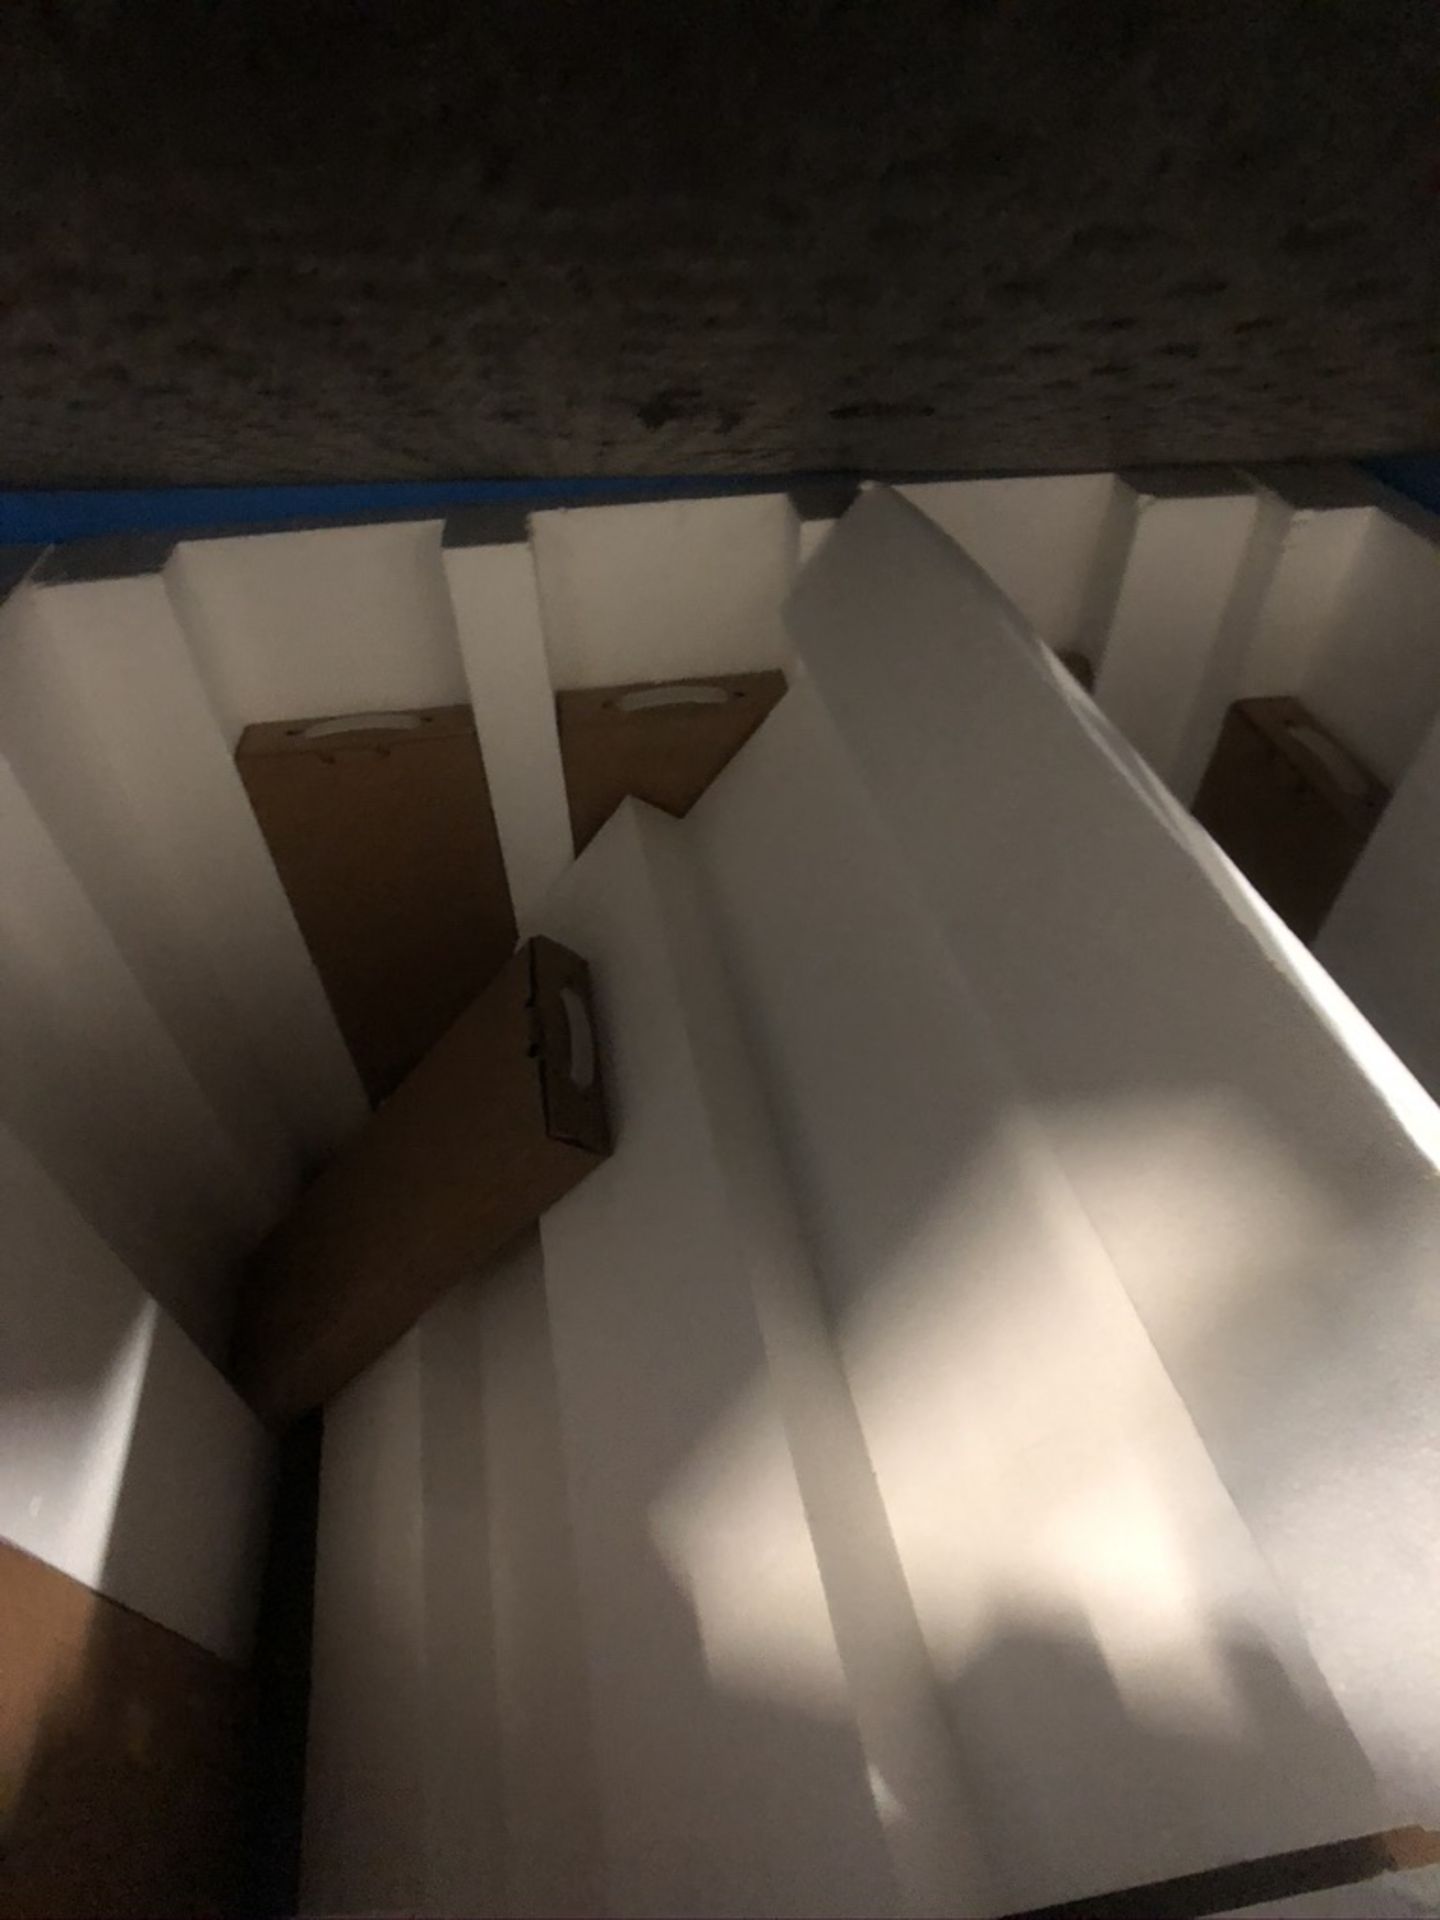 CRYOPAK ICE-PAK (9) BOXES (3 UNITS PER BOX), UNUSED IN BOXES - Image 3 of 4